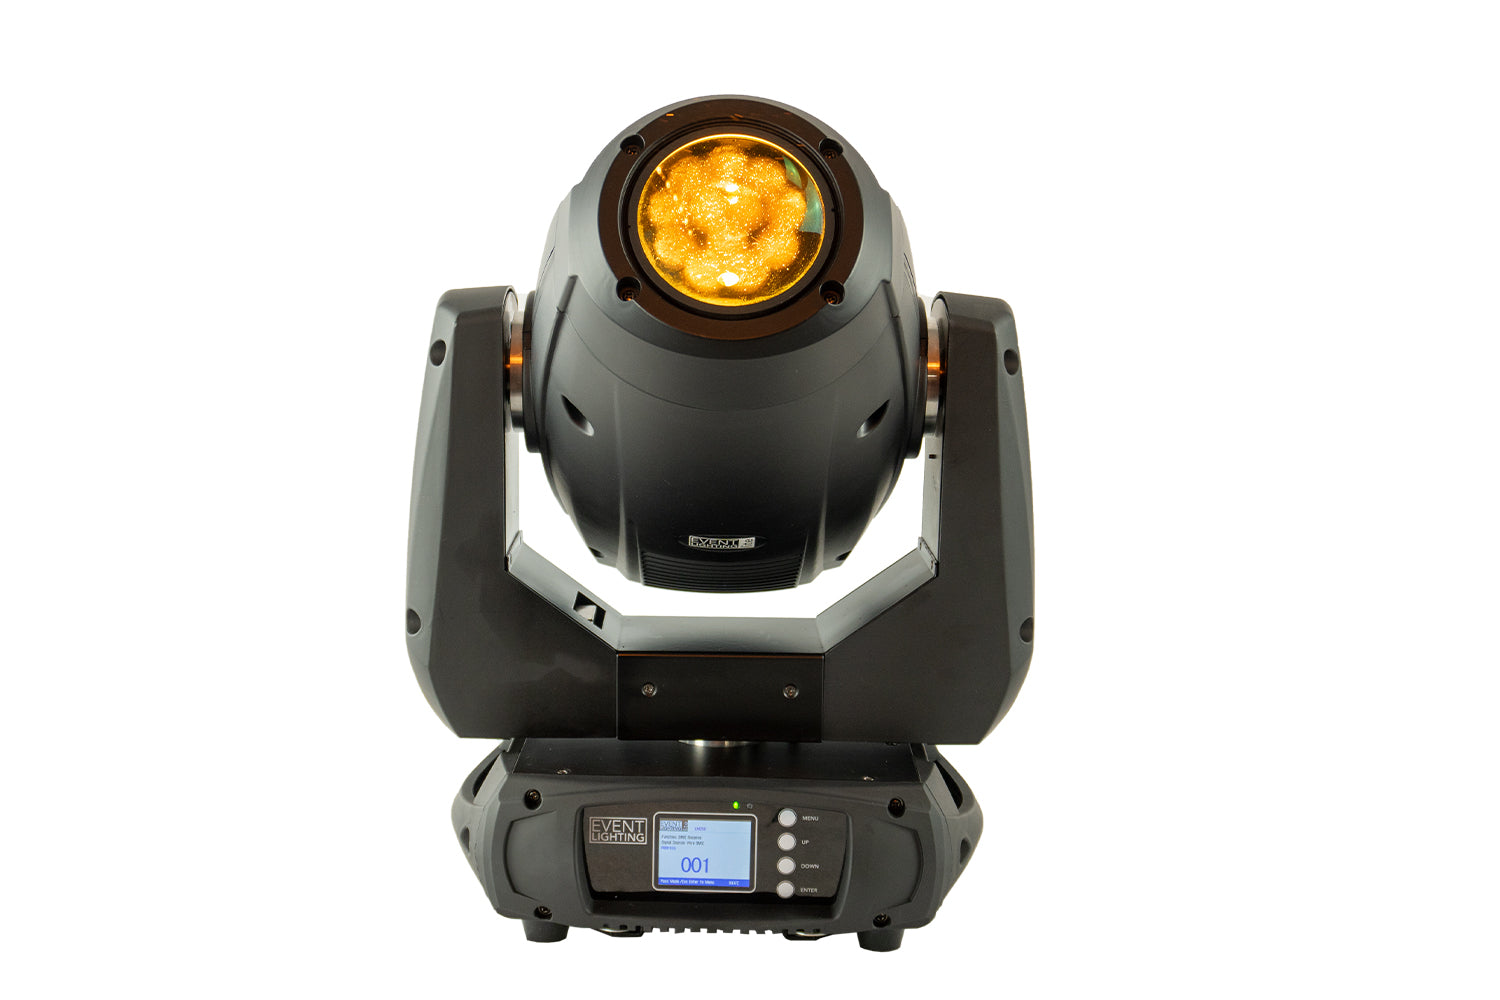 Event Lighting Lite LM250 Moving Head, front orange